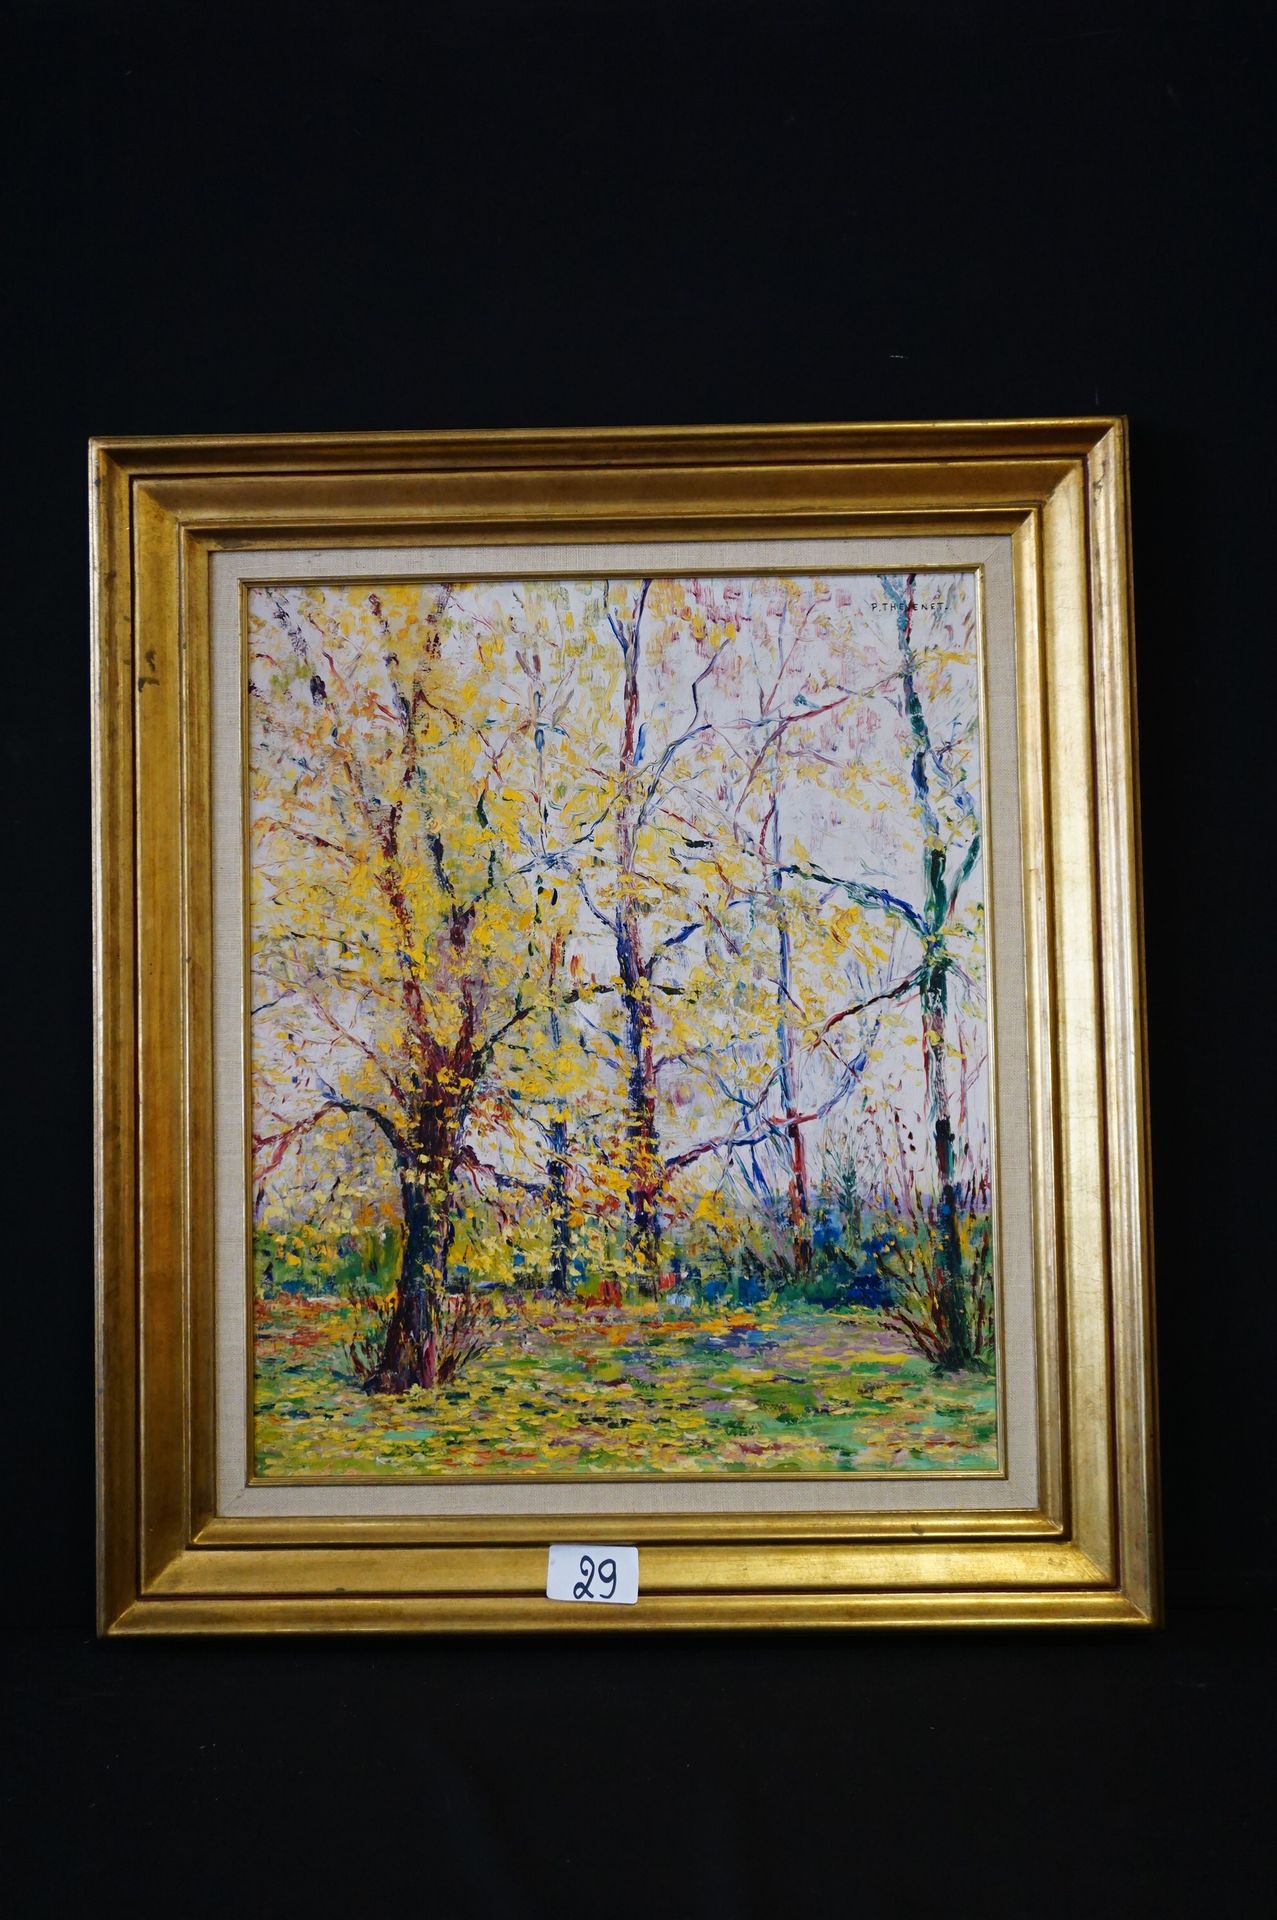 Pierre THEVENET (1870 - 1937) Colores de otoño" - Óleo sobre lienzo - firmado ar&hellip;